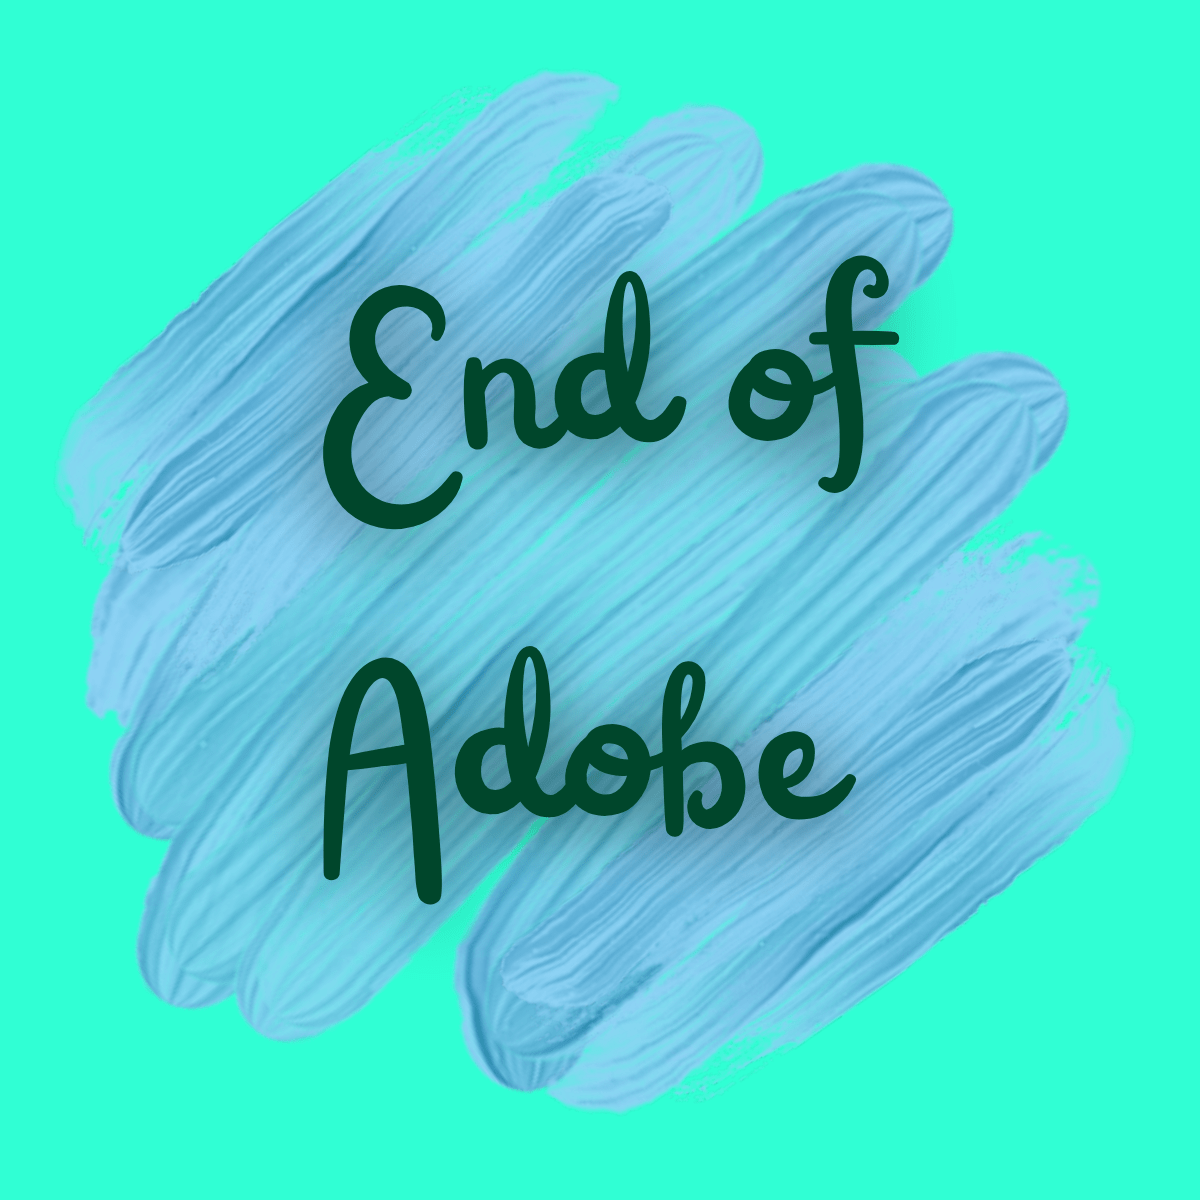 End of Adobe XD